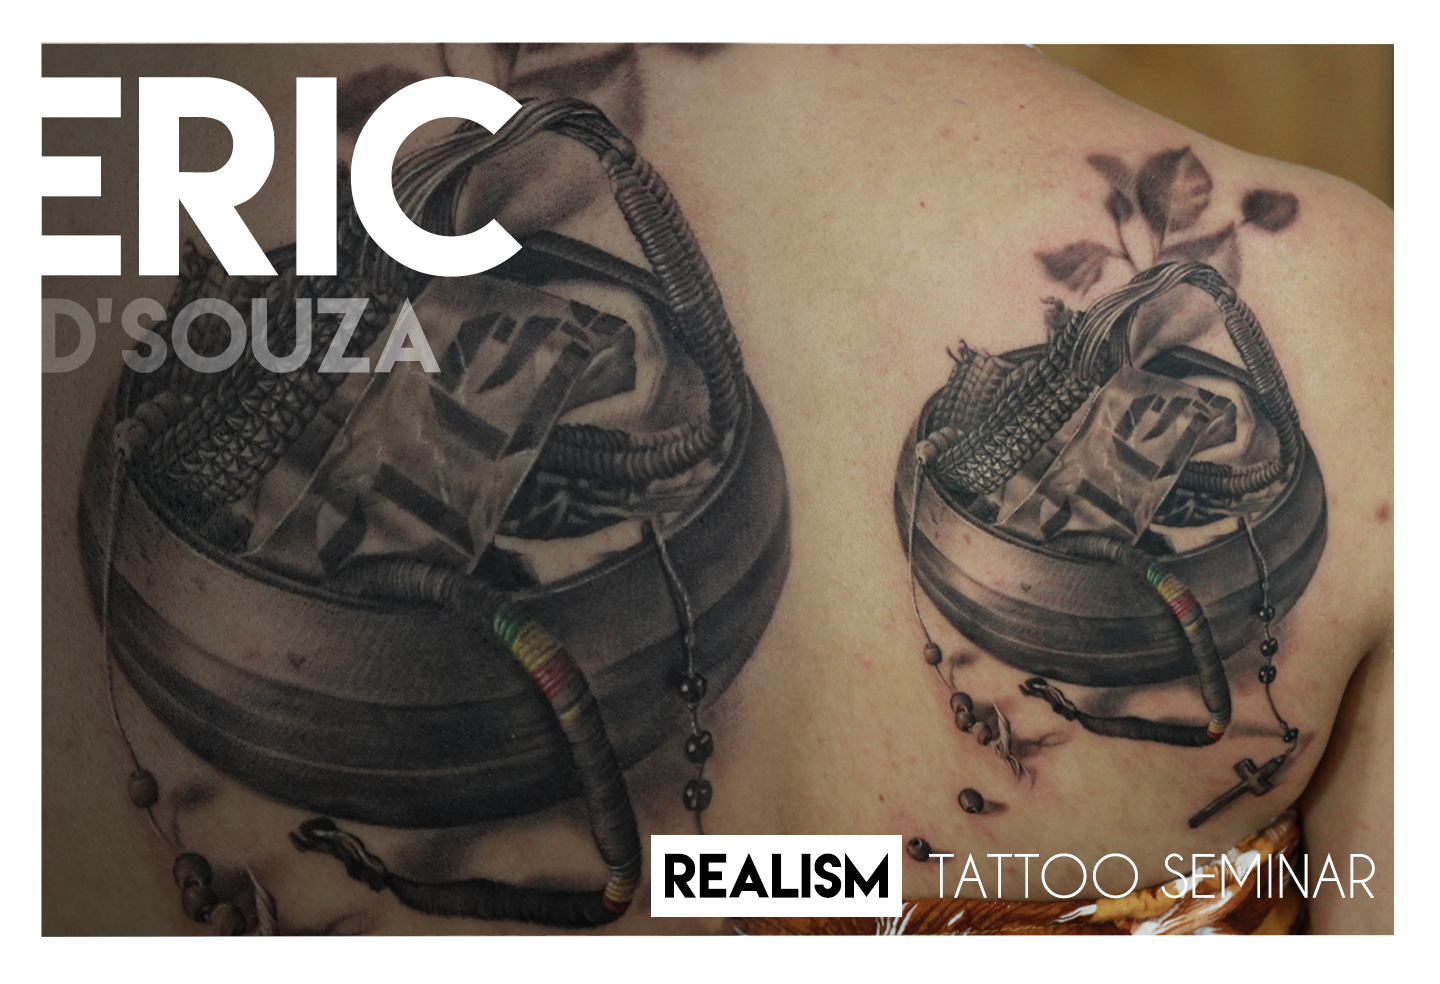 REALISM Tattoo Seminar 2016 by Eric Jason D'souza - Iron Buzz Tattoos